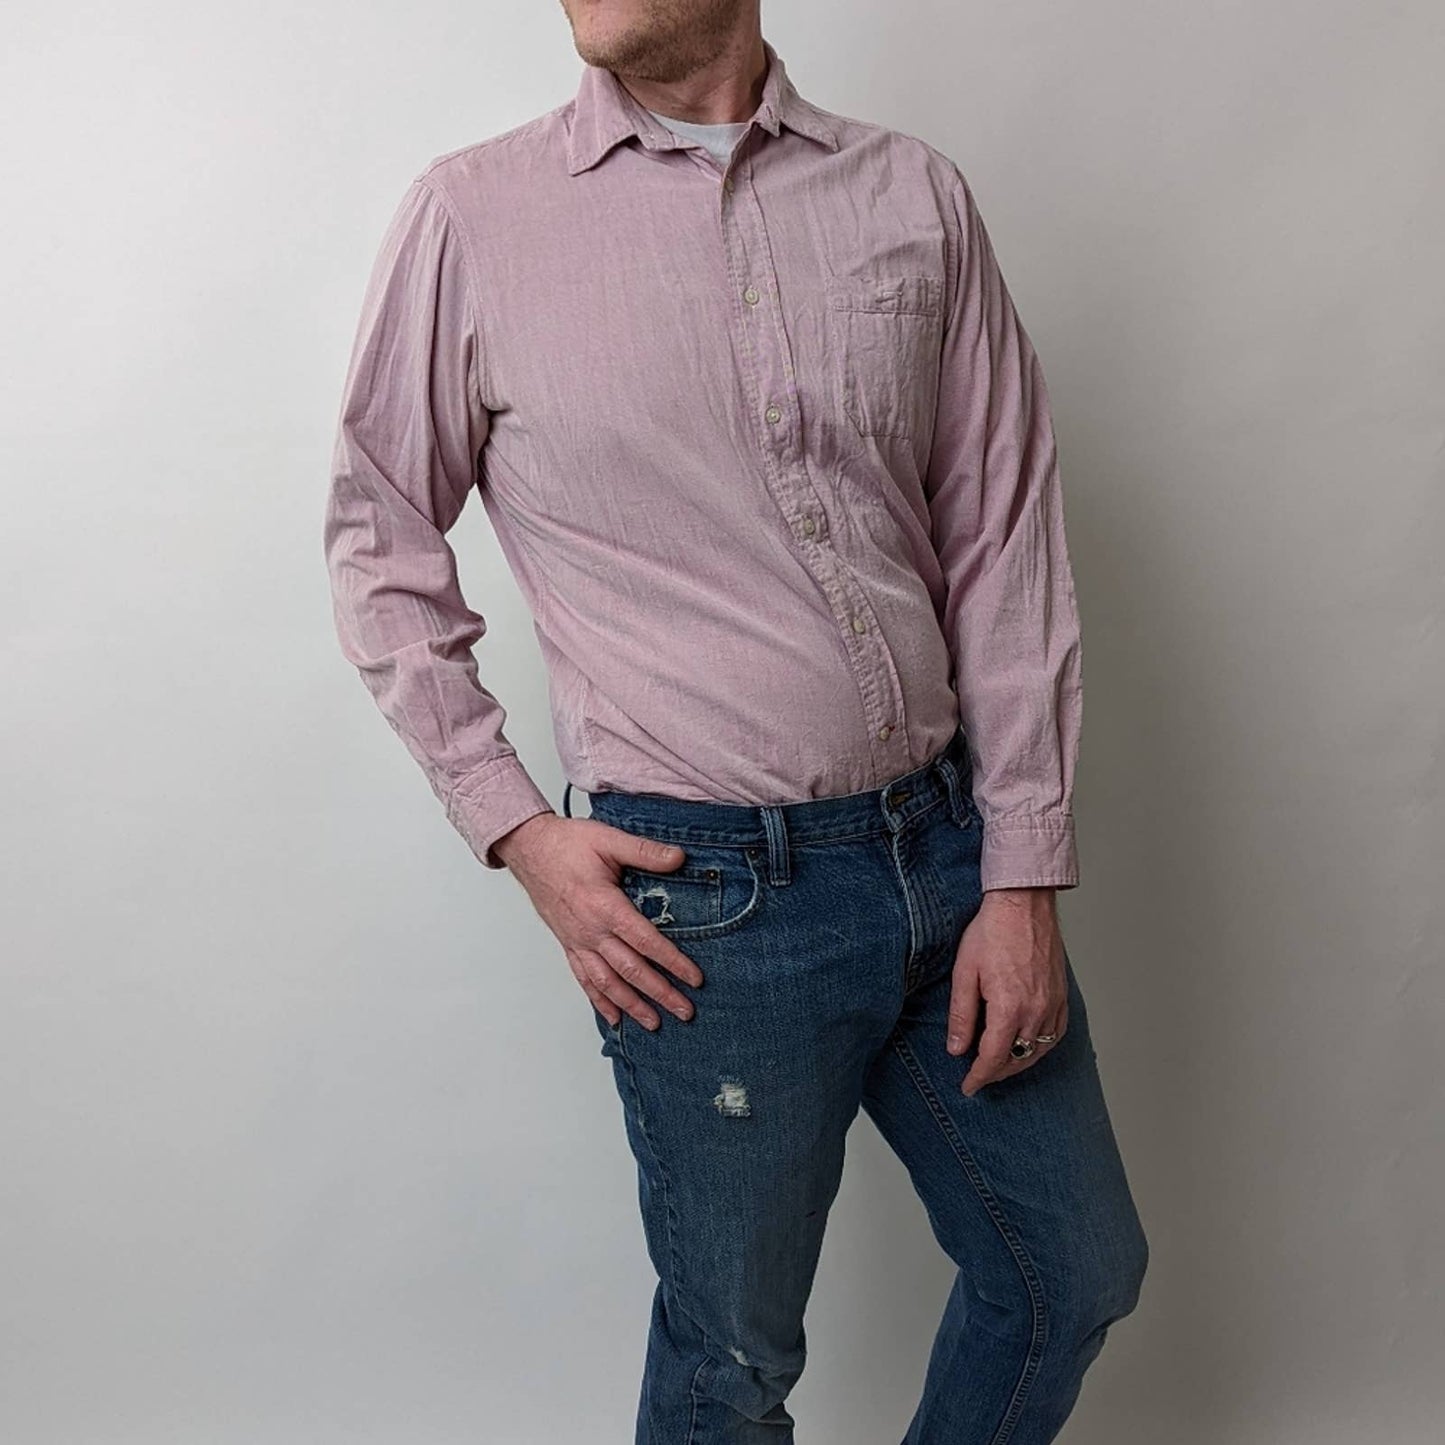 Cremieux Pale Pink Long Sleeved Button Down Dress Shirt - M